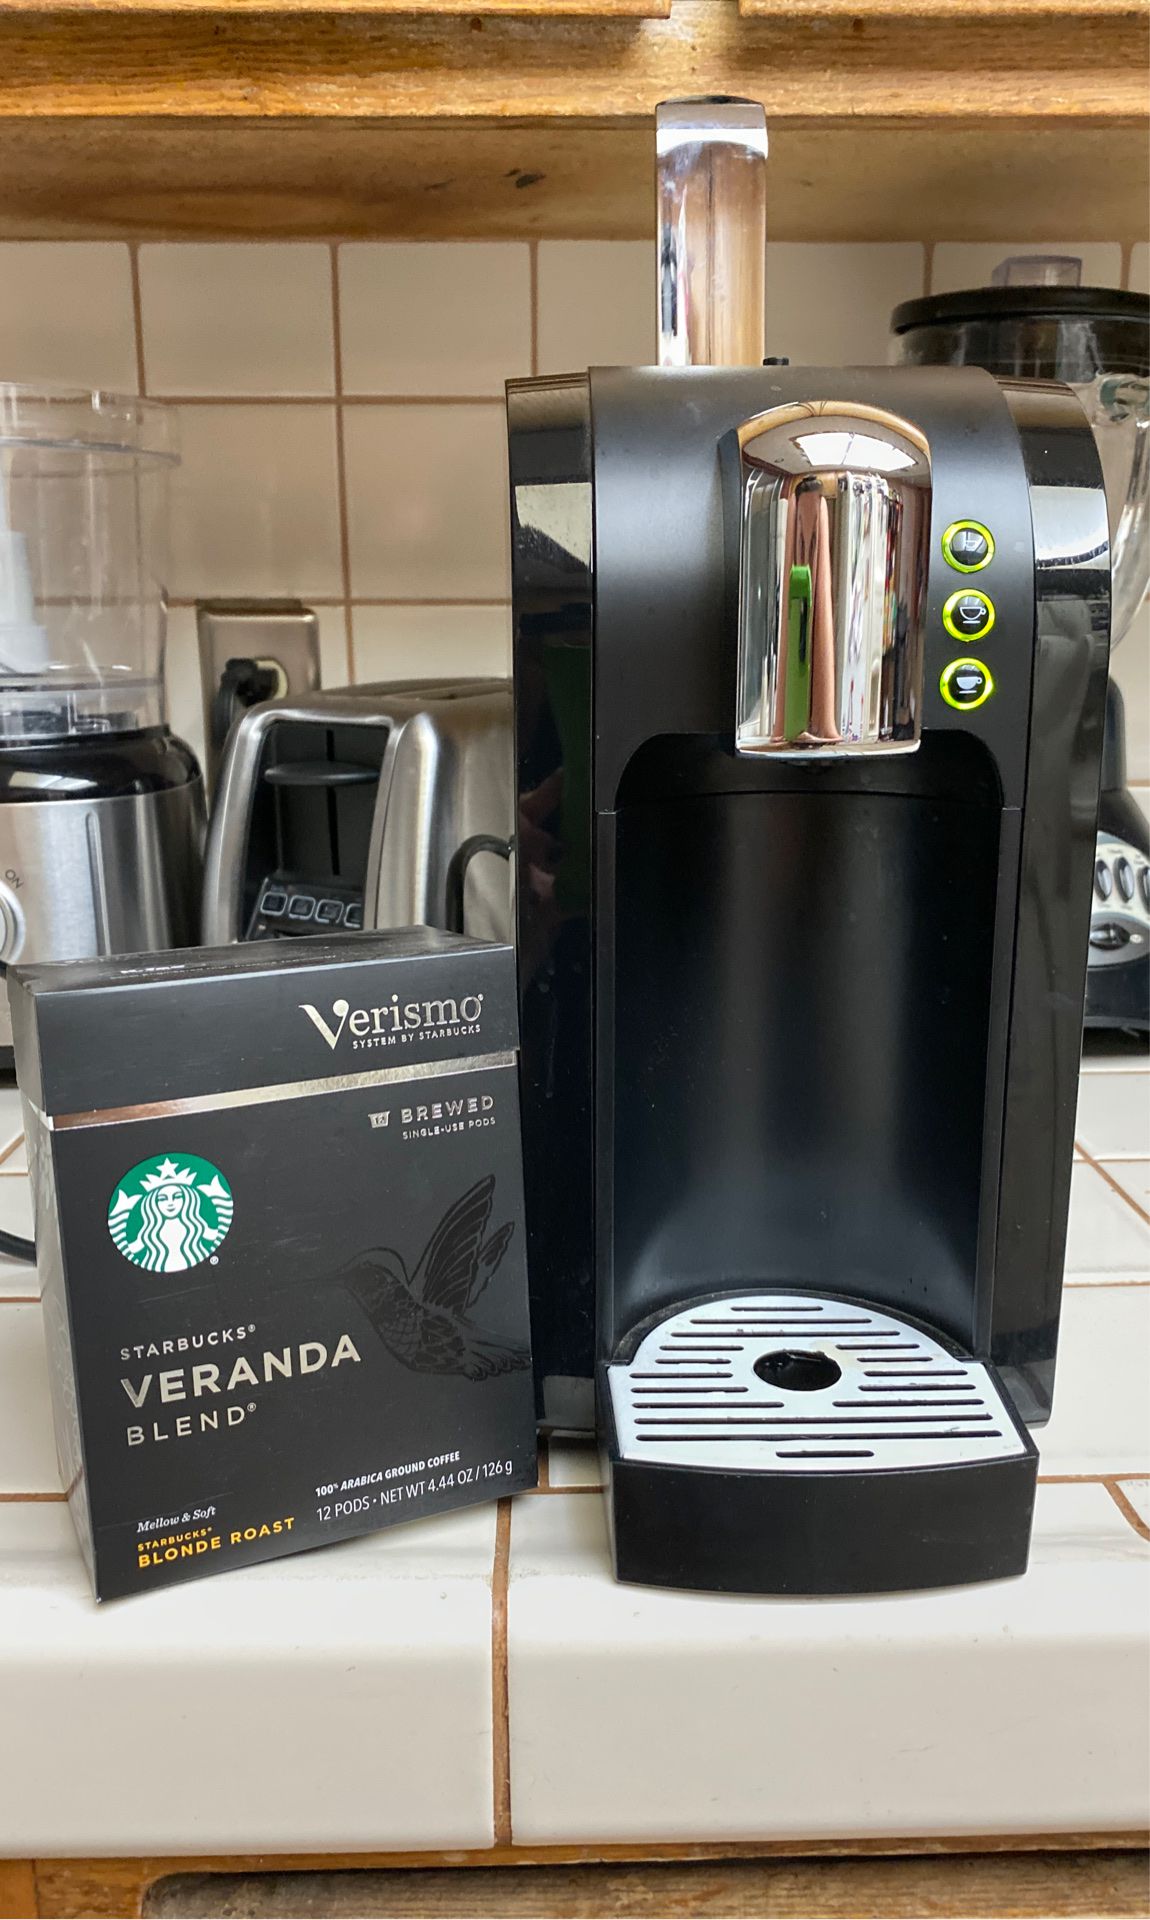 Starbucks Verismo machine